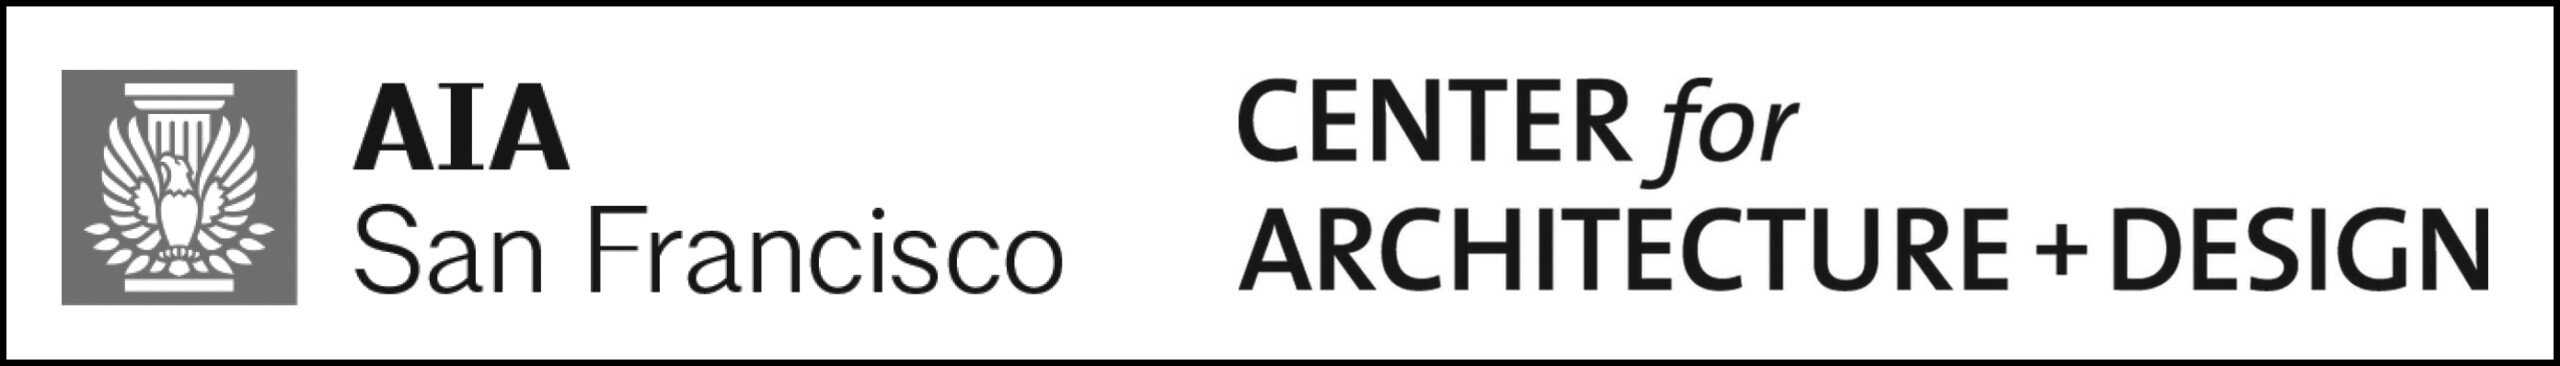 AIASF + Center for Architecture + Design